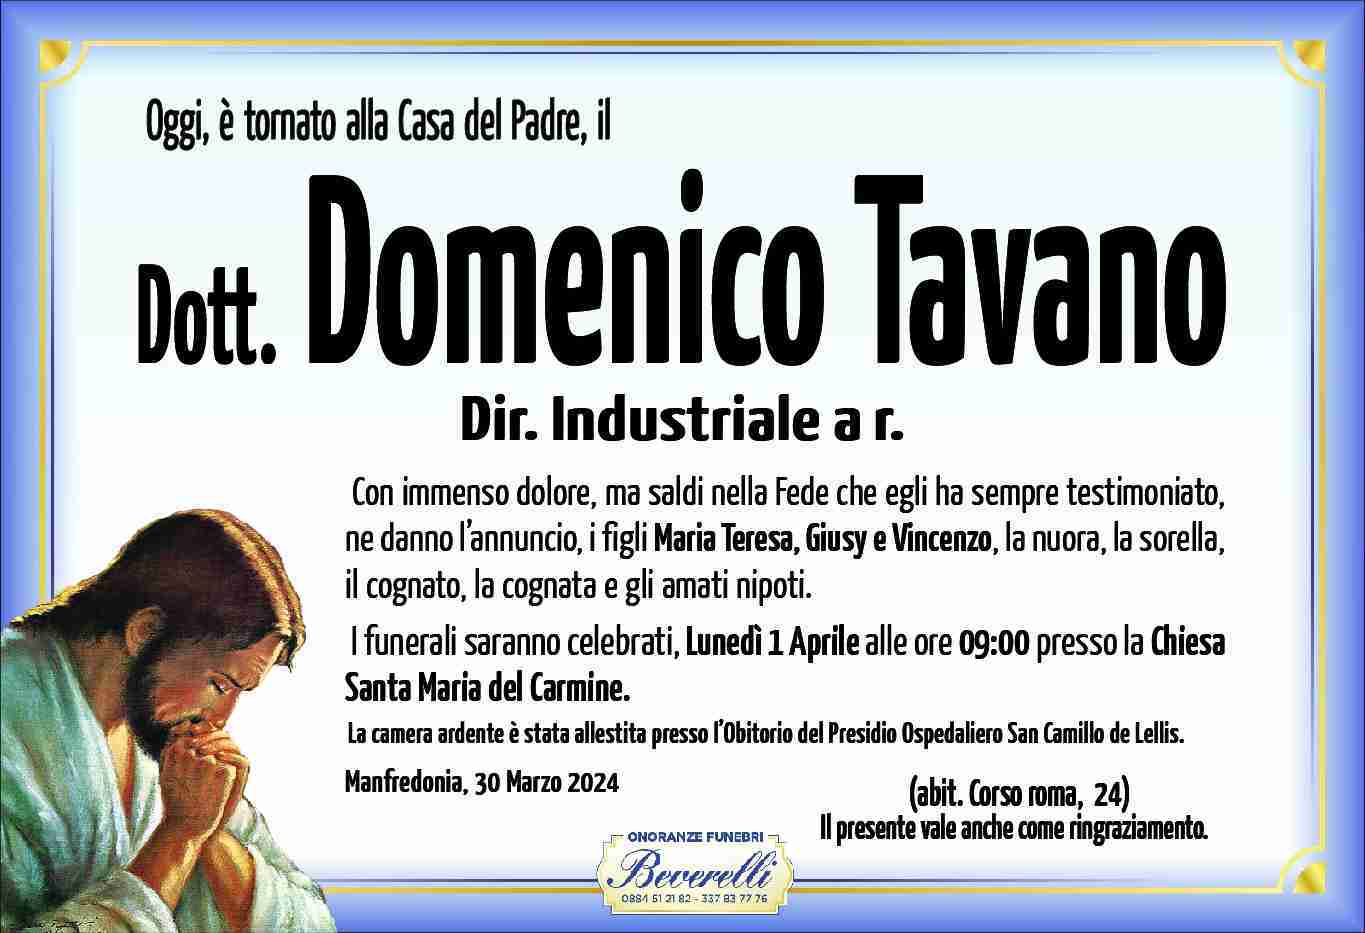 Domenico Tavano